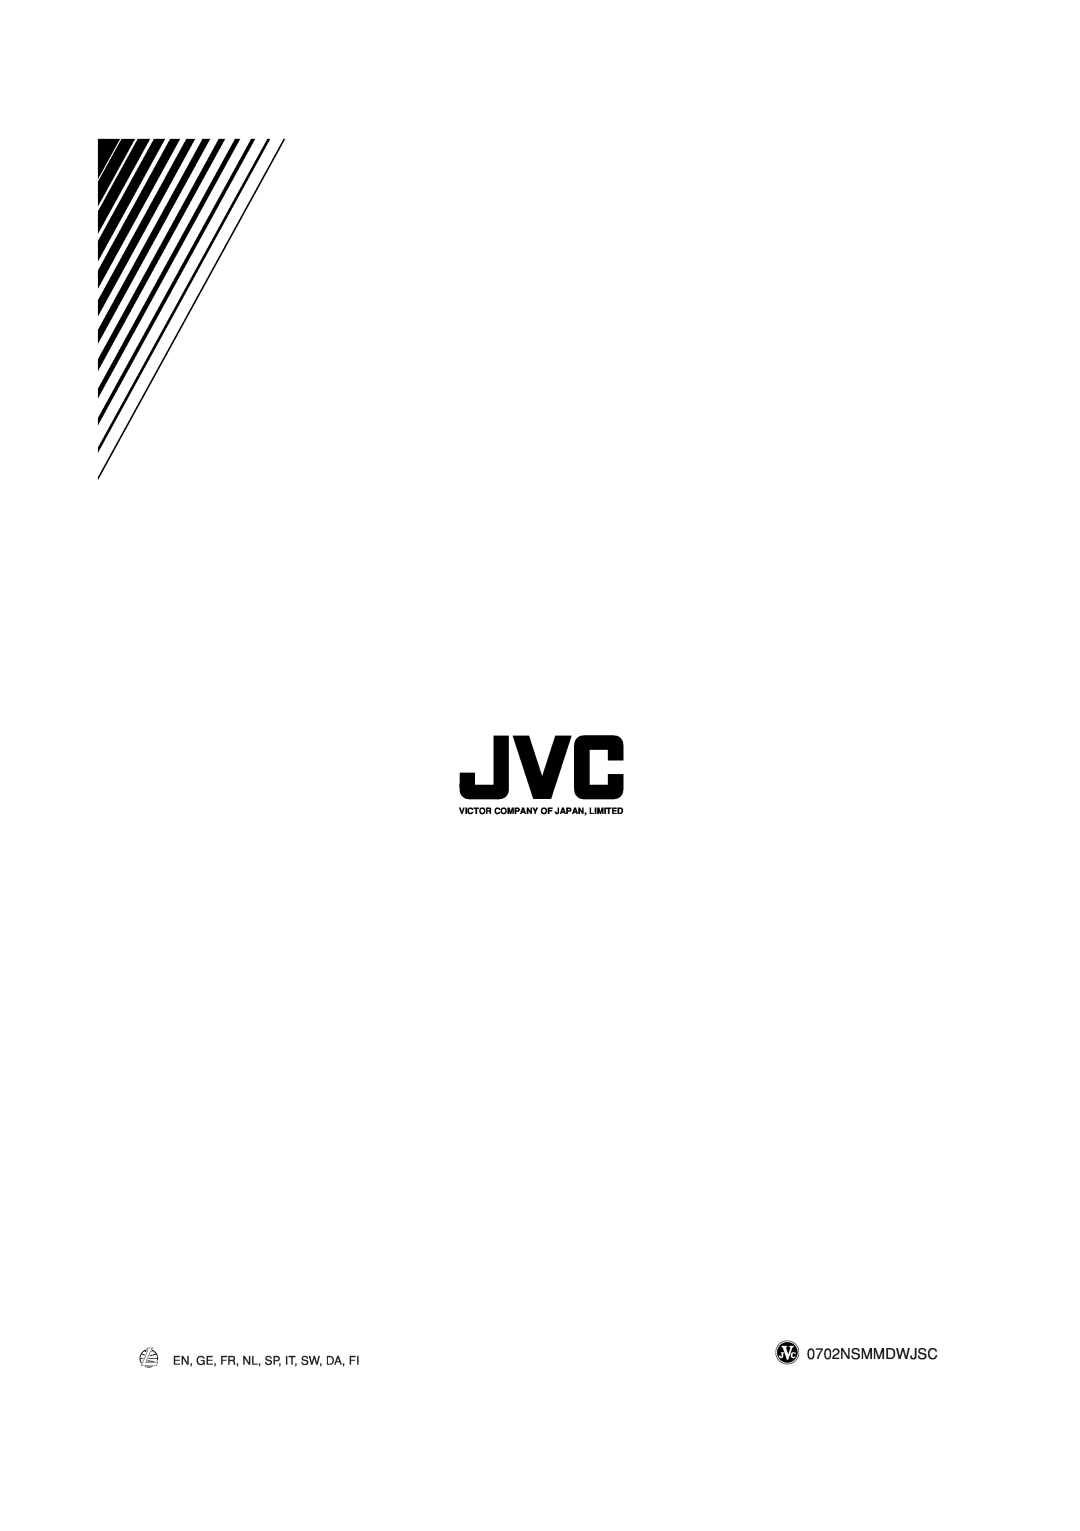 JVC SW-DW303 manual 0702NSMMDWJSC, En, Ge, Fr, Nl, Sp, It, Sw, Da, Fi, Victor Company Of Japan, Limited 